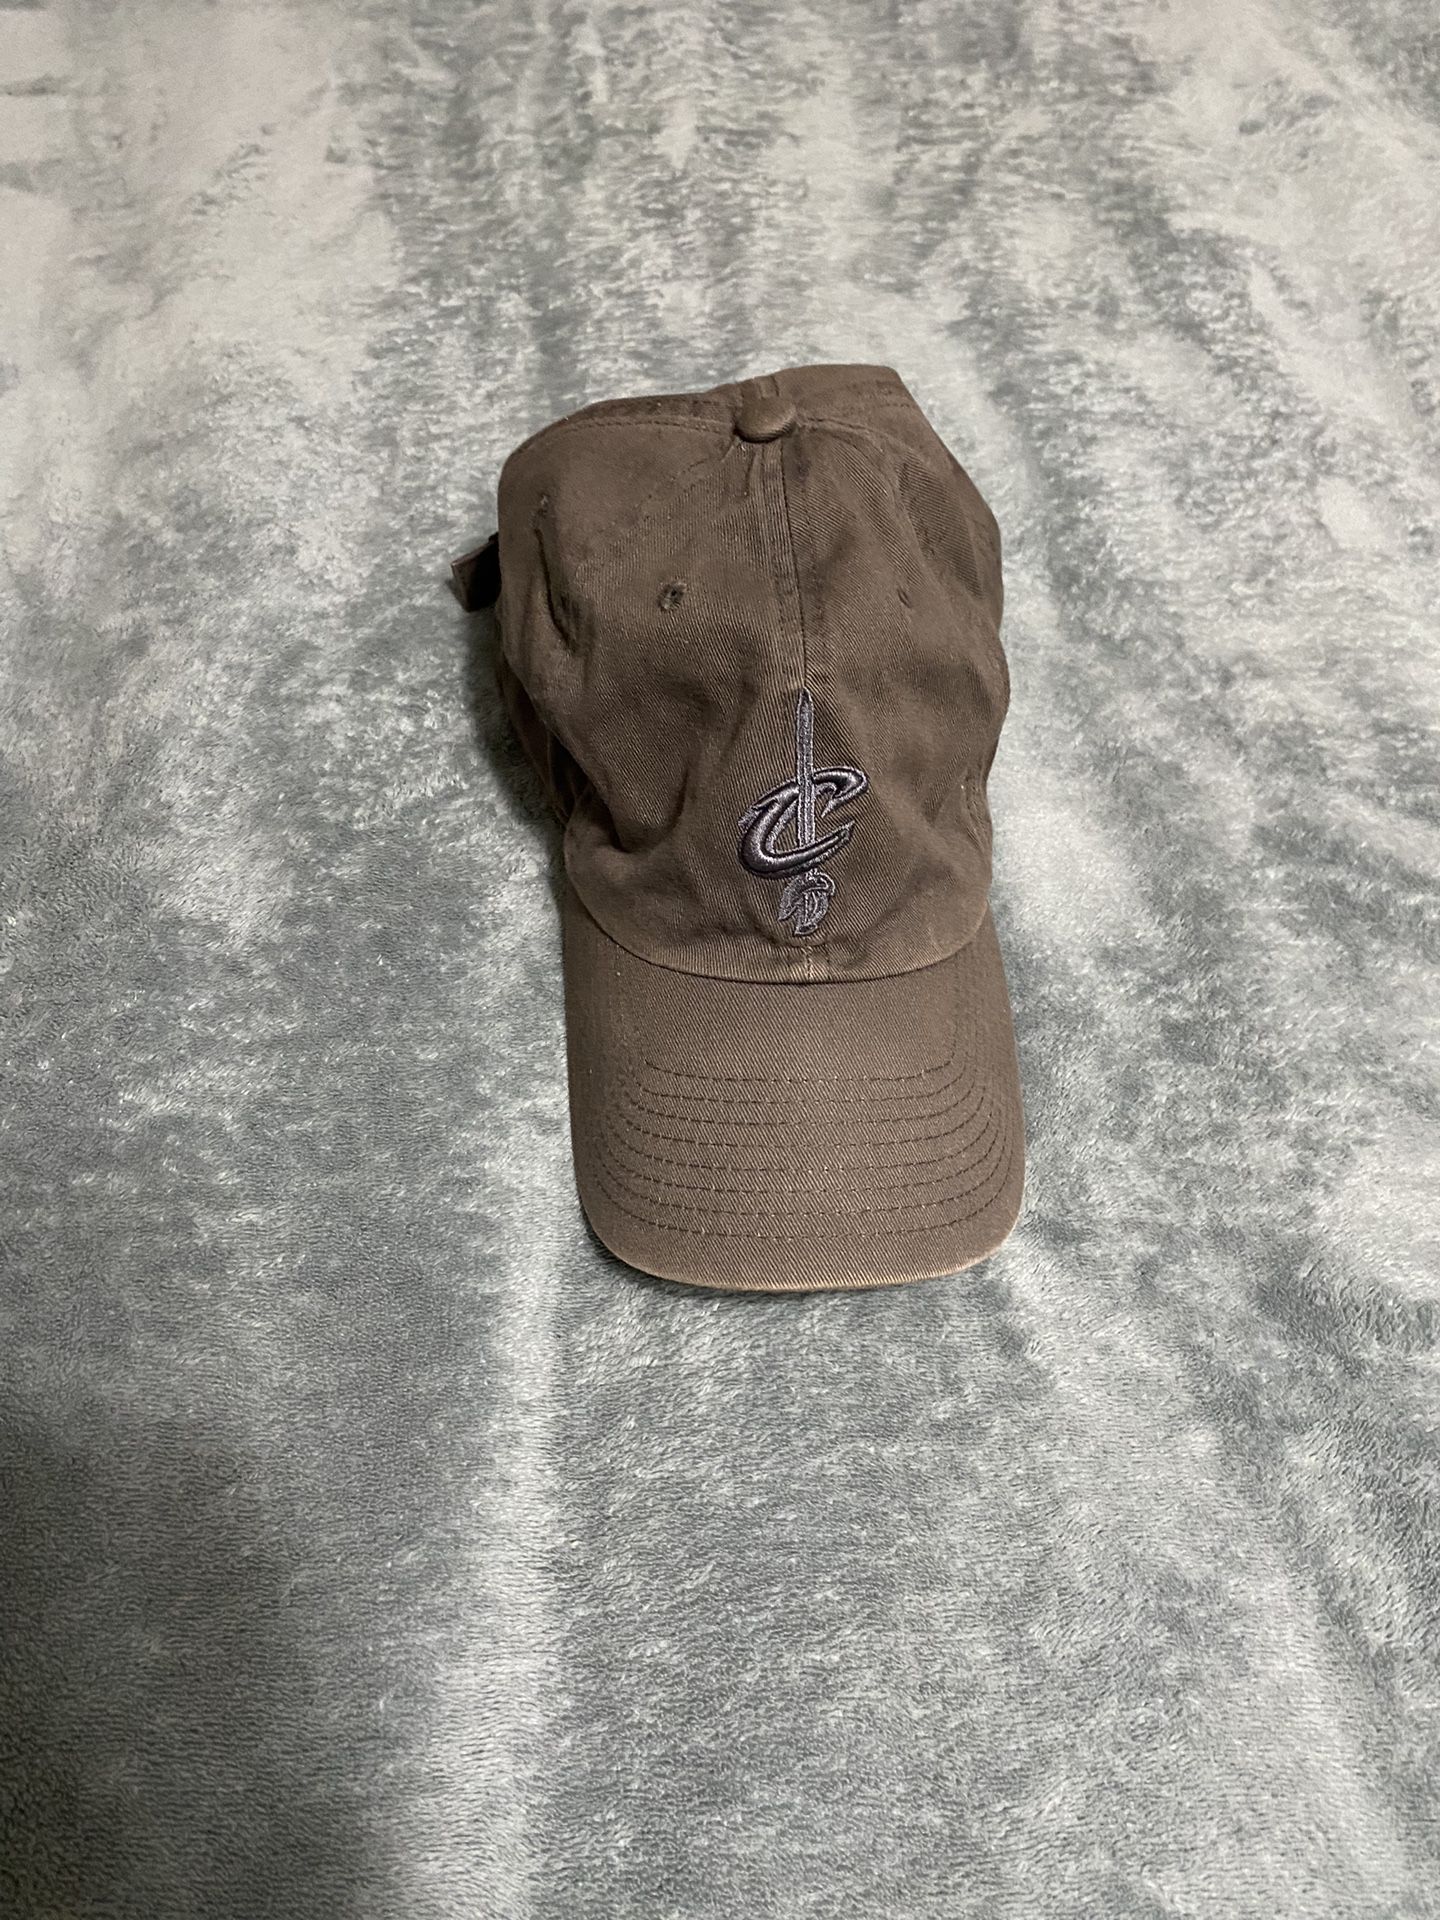 Gray Cavs Hat